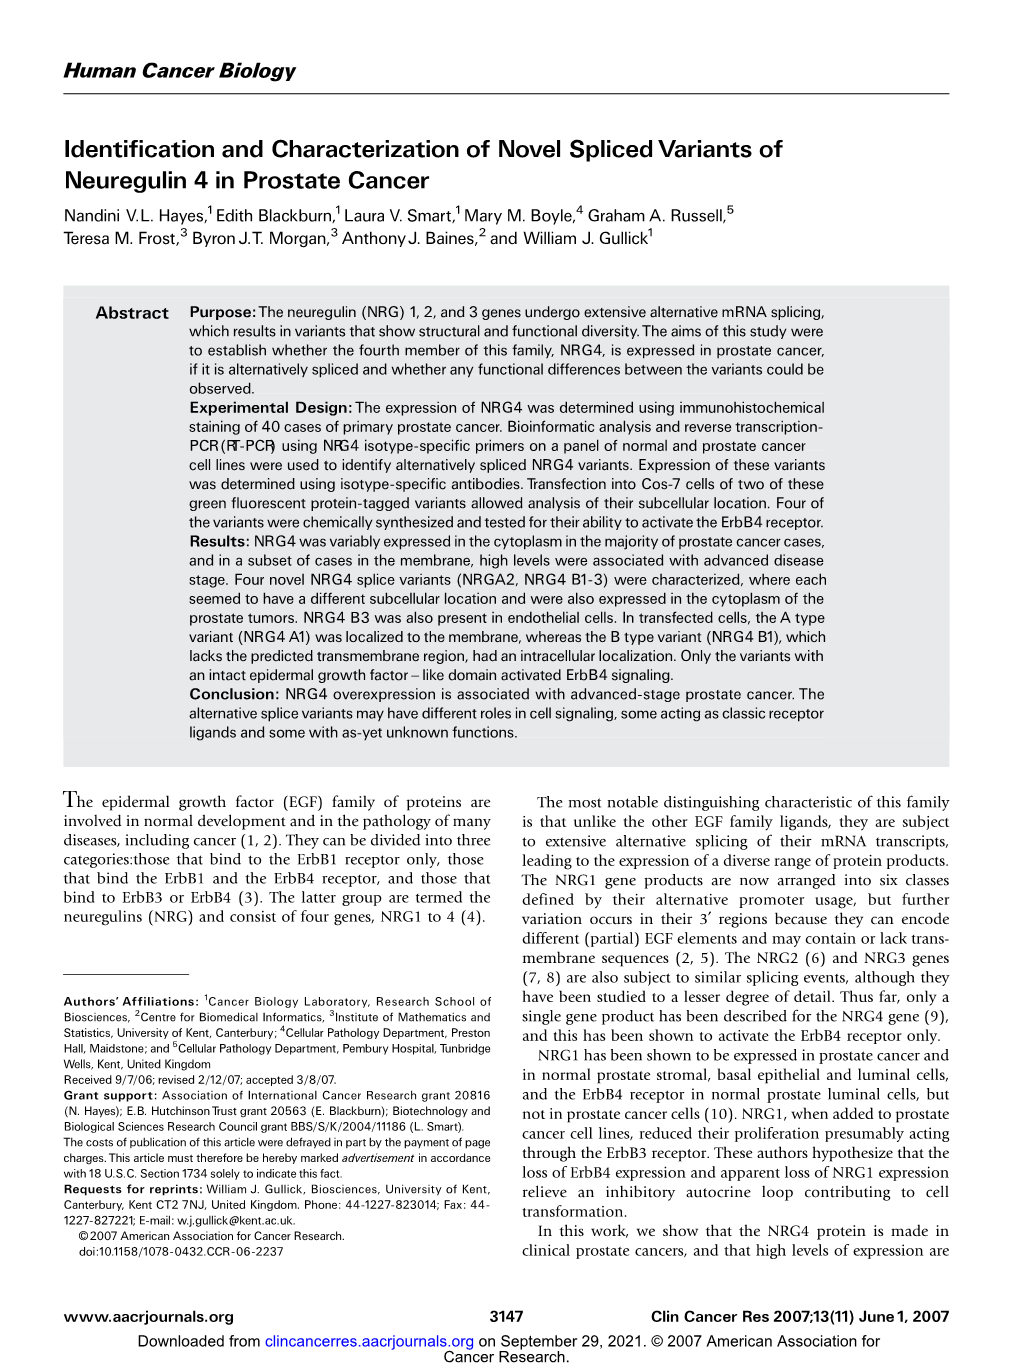 Identification and Characterization of Novel Spliced Variants of Neuregulin 4 in Prostate Cancer Nandini V.L